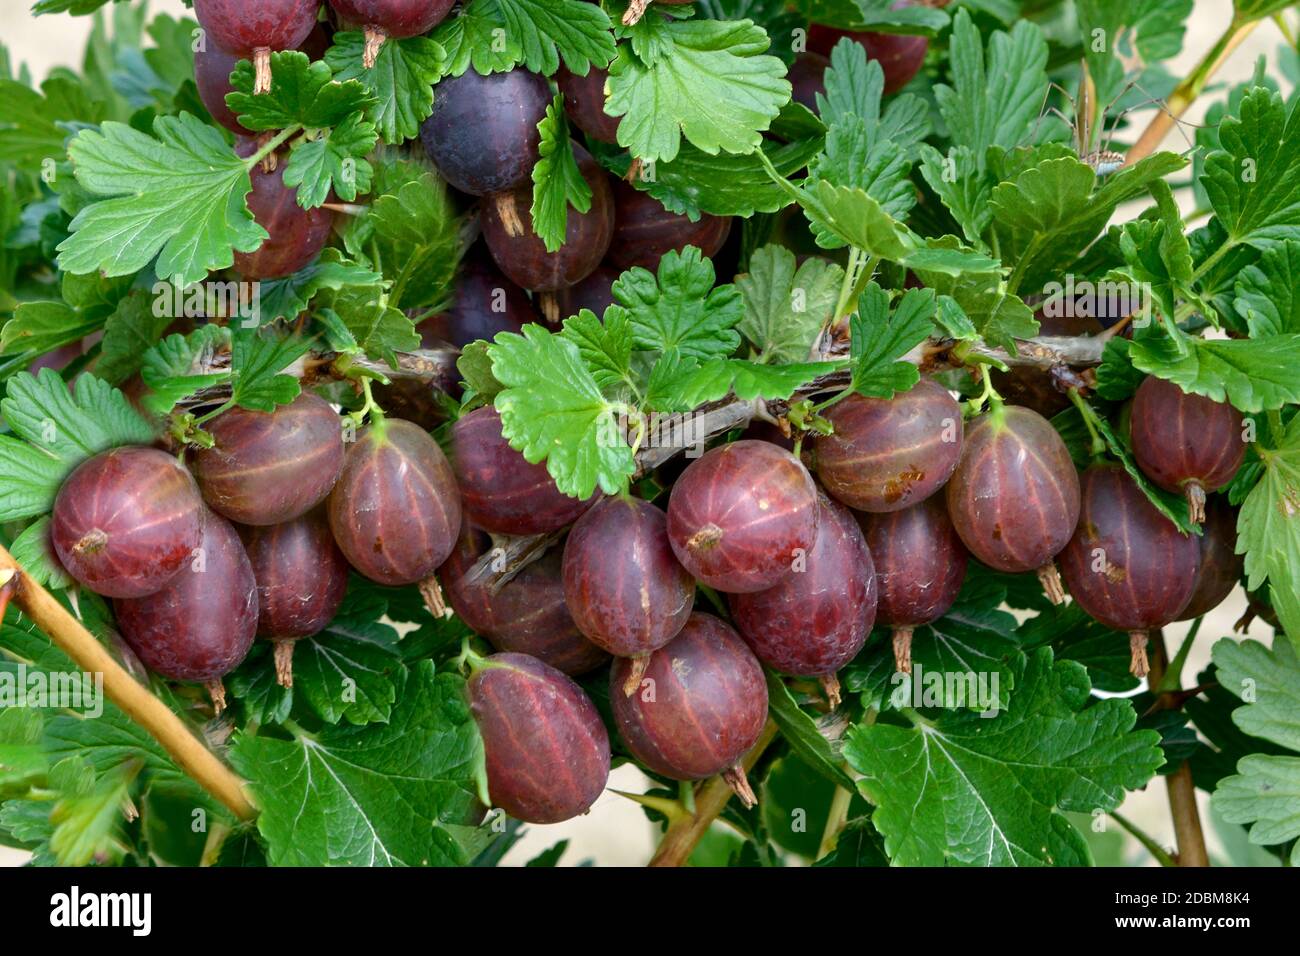 Ribes uva crispa hinnonmaki rot hi-res stock photography and images - Alamy